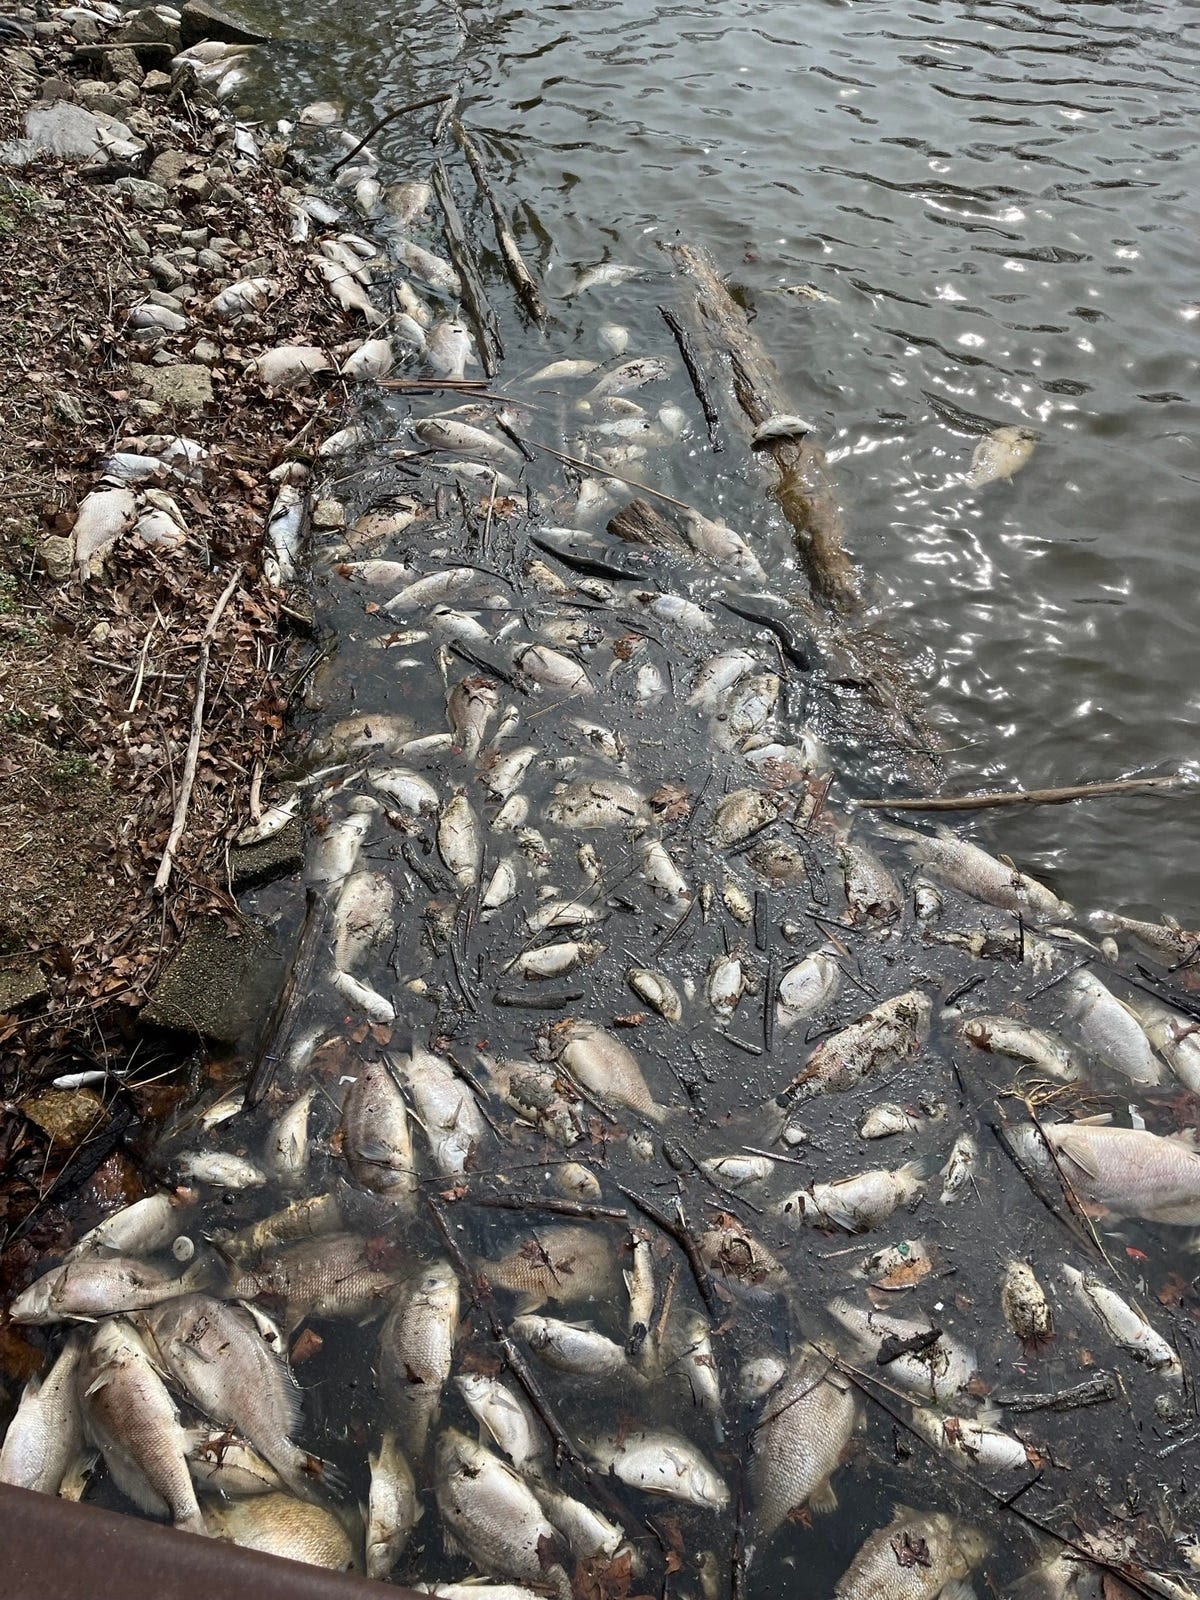 Large numbers of fish dying in Michigan's Lake Macatawa